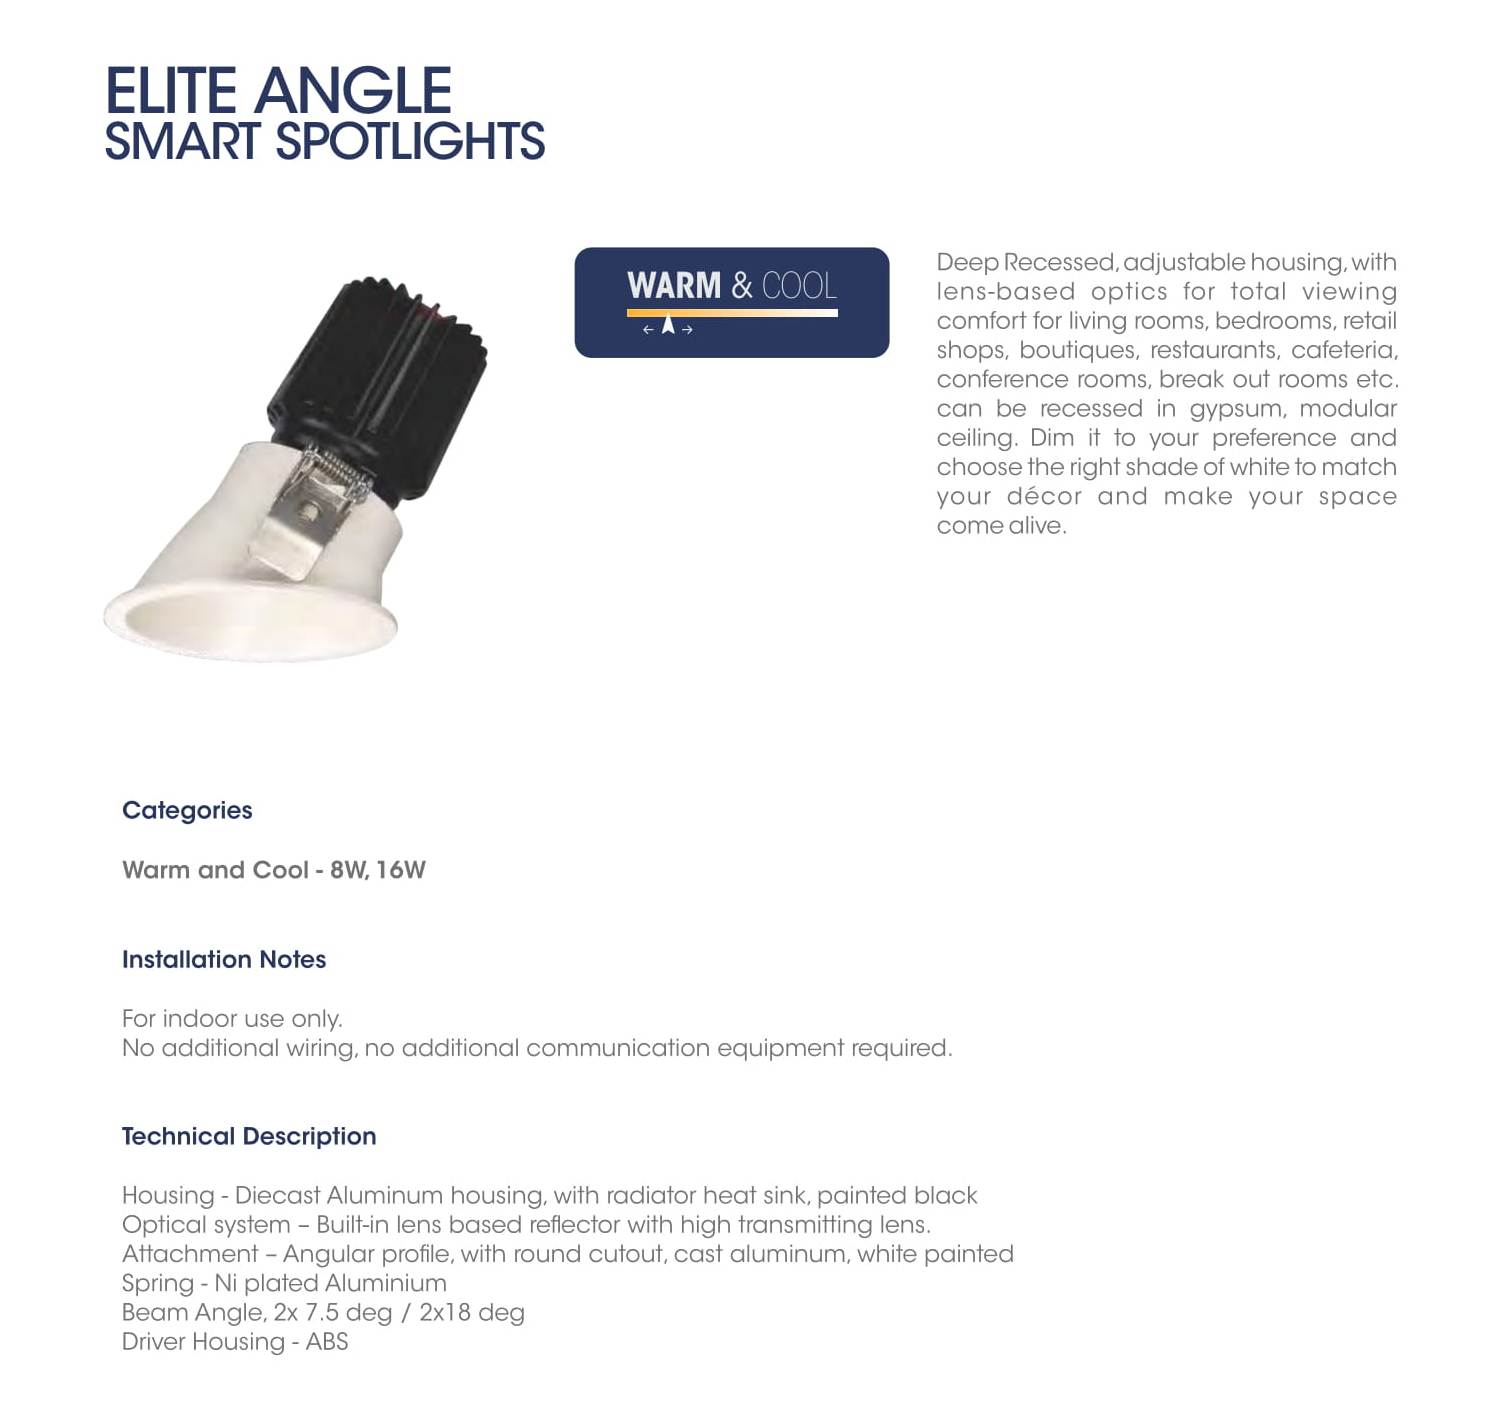 Elite Angle Smart Spotlights